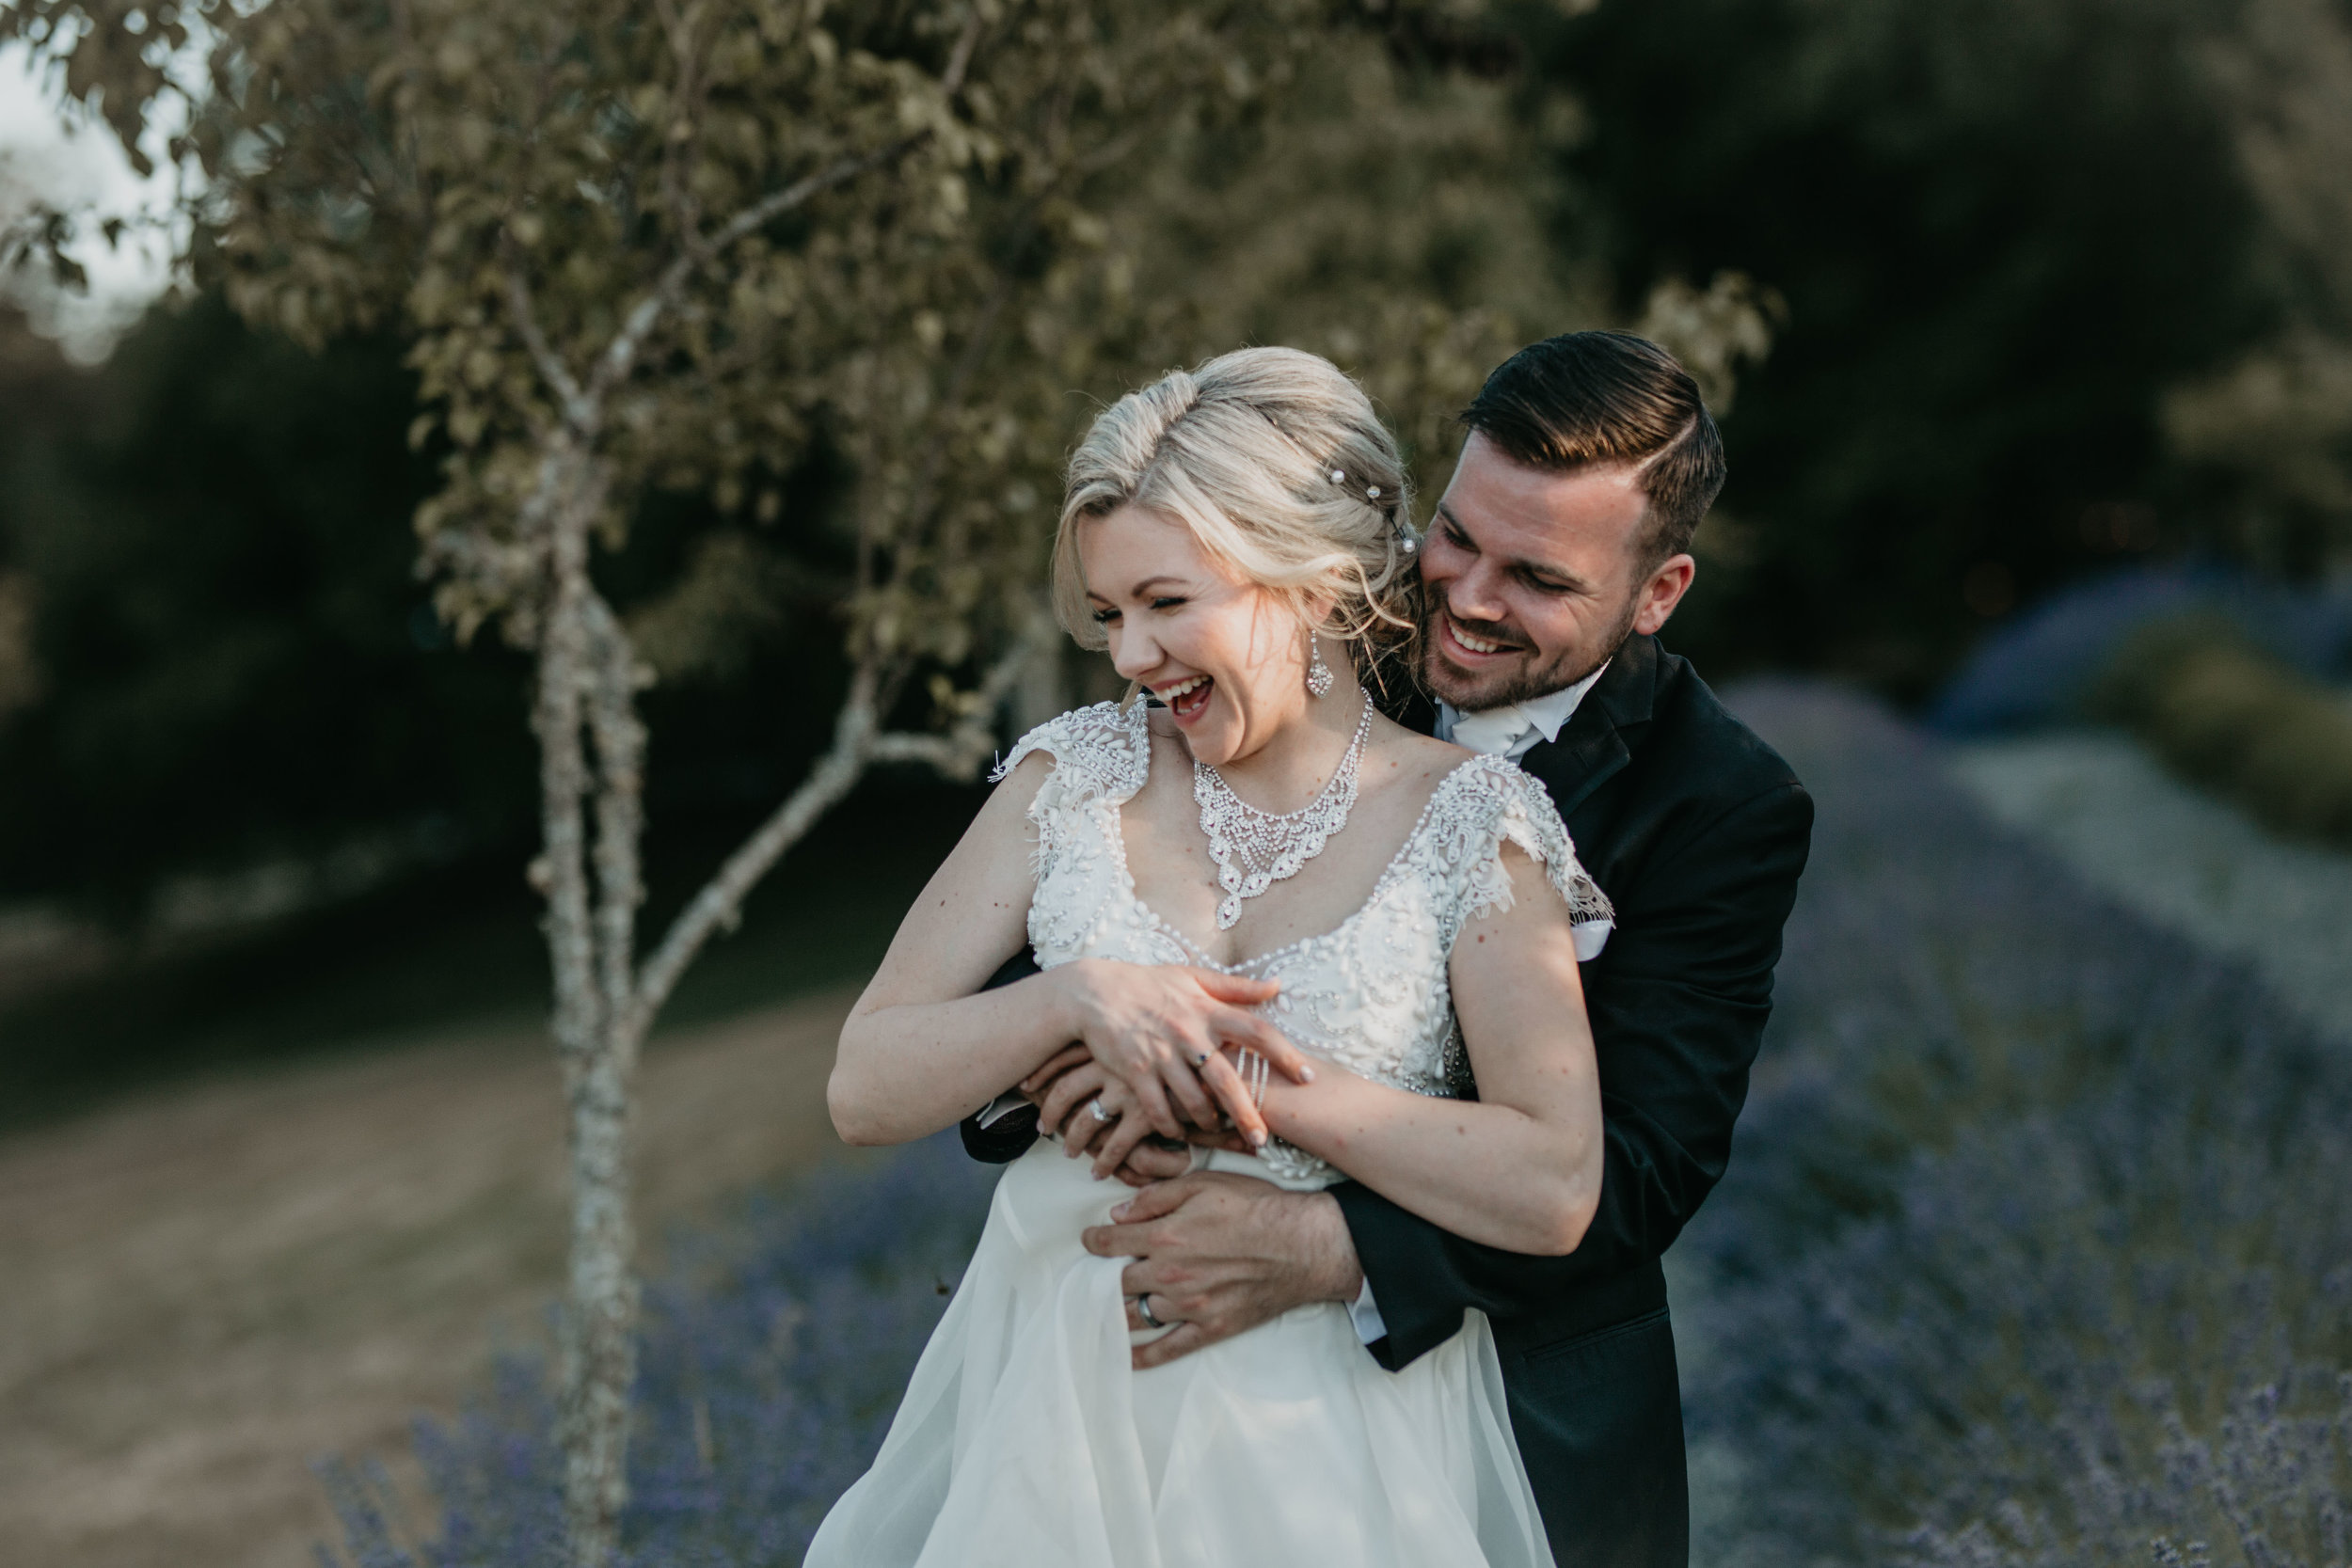 nicole-daacke-photography-kingston-house-bainbride-washington-wedding-photography-summer-wedding-lavendar-field-pacific-northwest-wedding-glam-forest-elopement-photographer-72.jpg